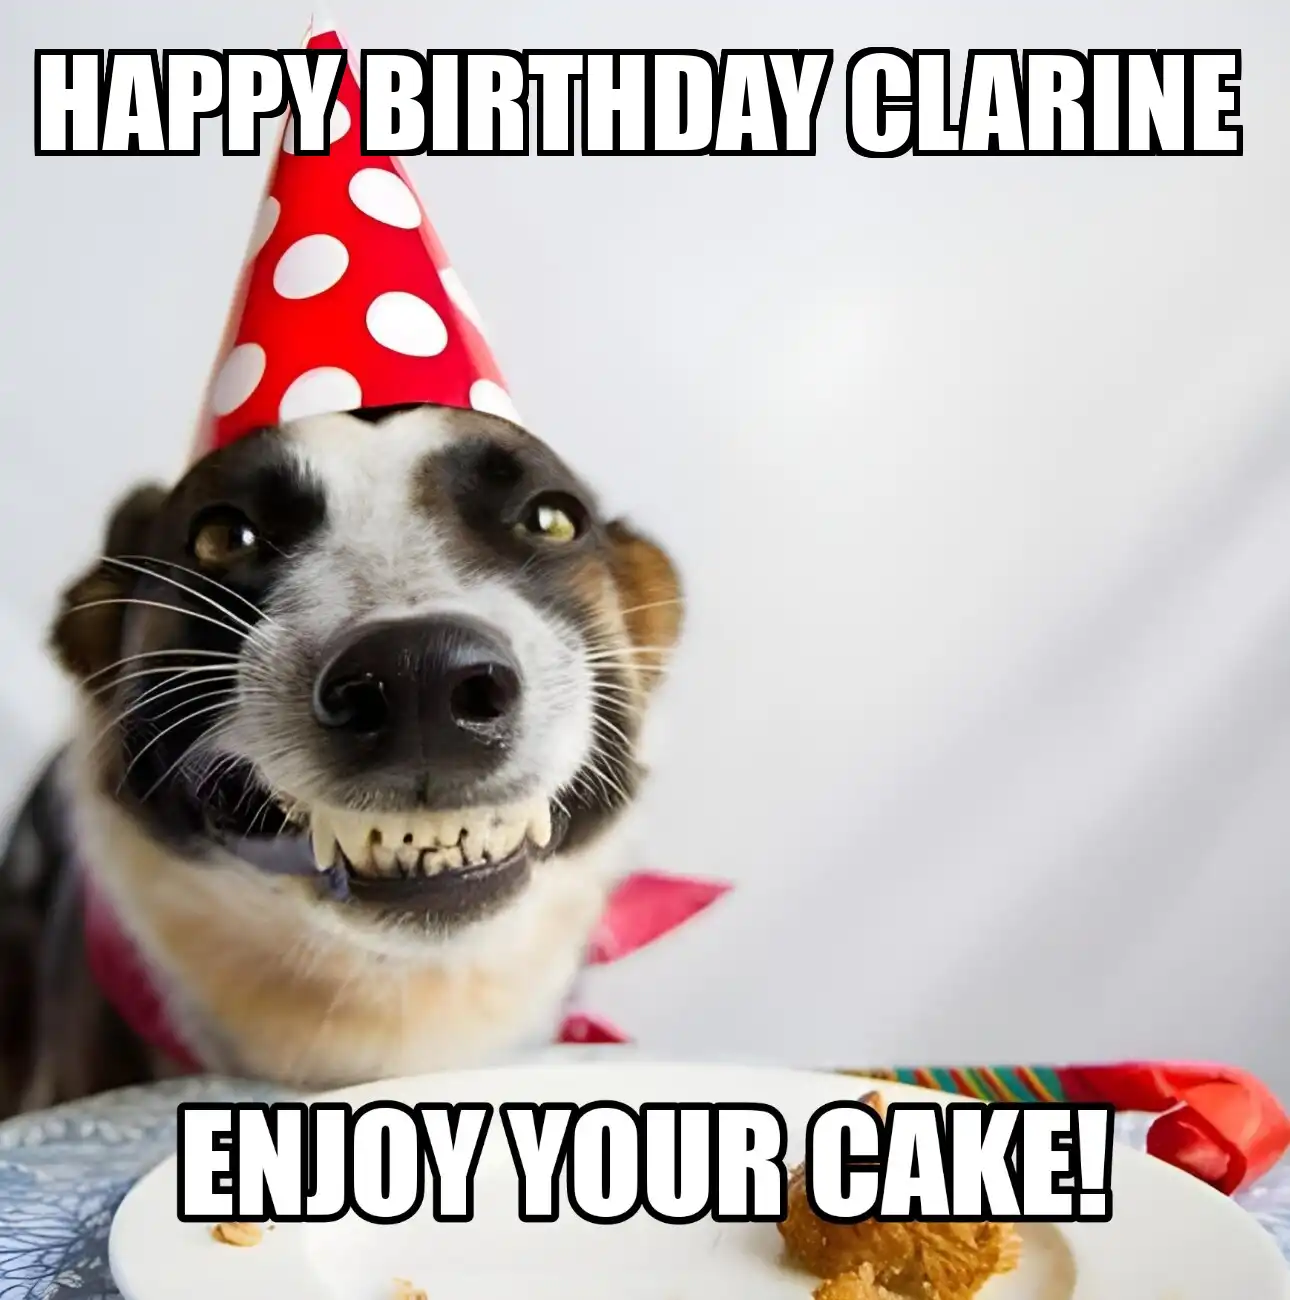 Happy Birthday Clarine Enjoy Your Cake Dog Meme